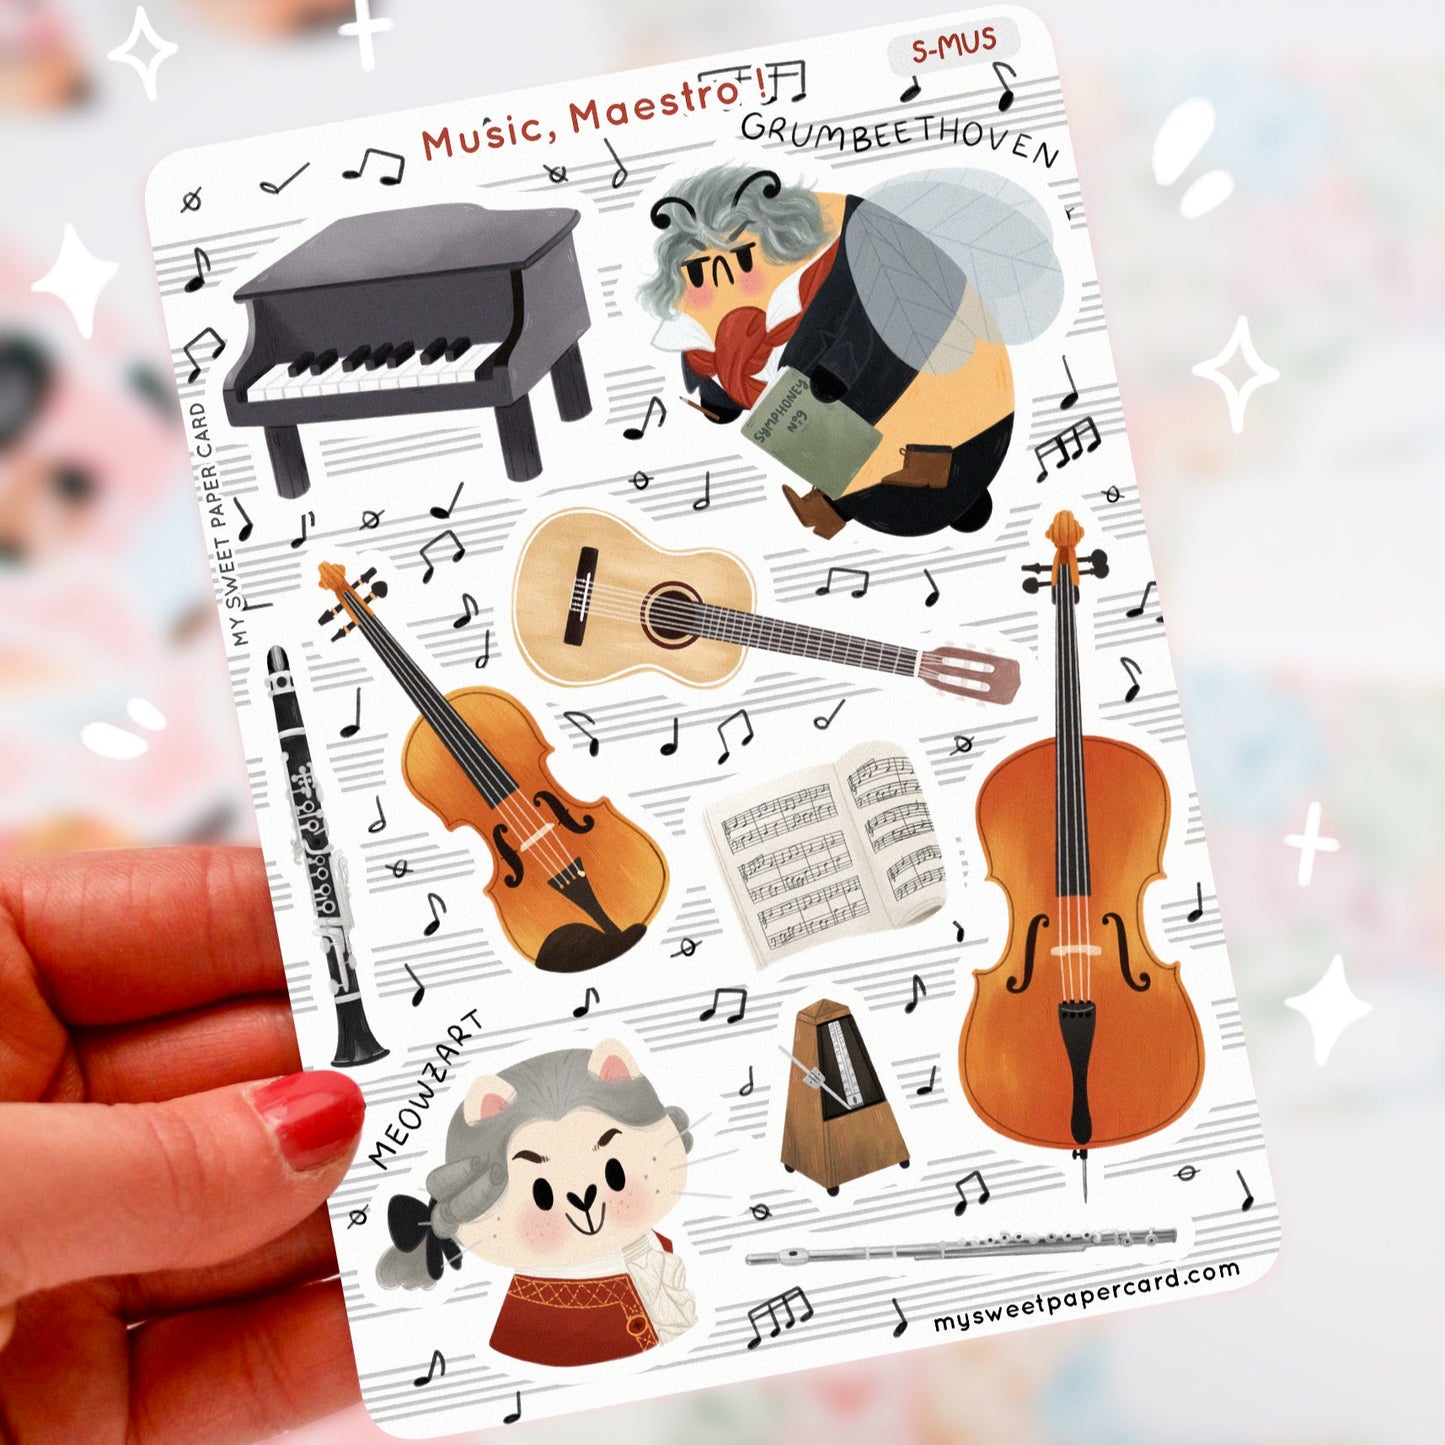 Music Maestro - Instruments stickers sheet - Music planner stickers